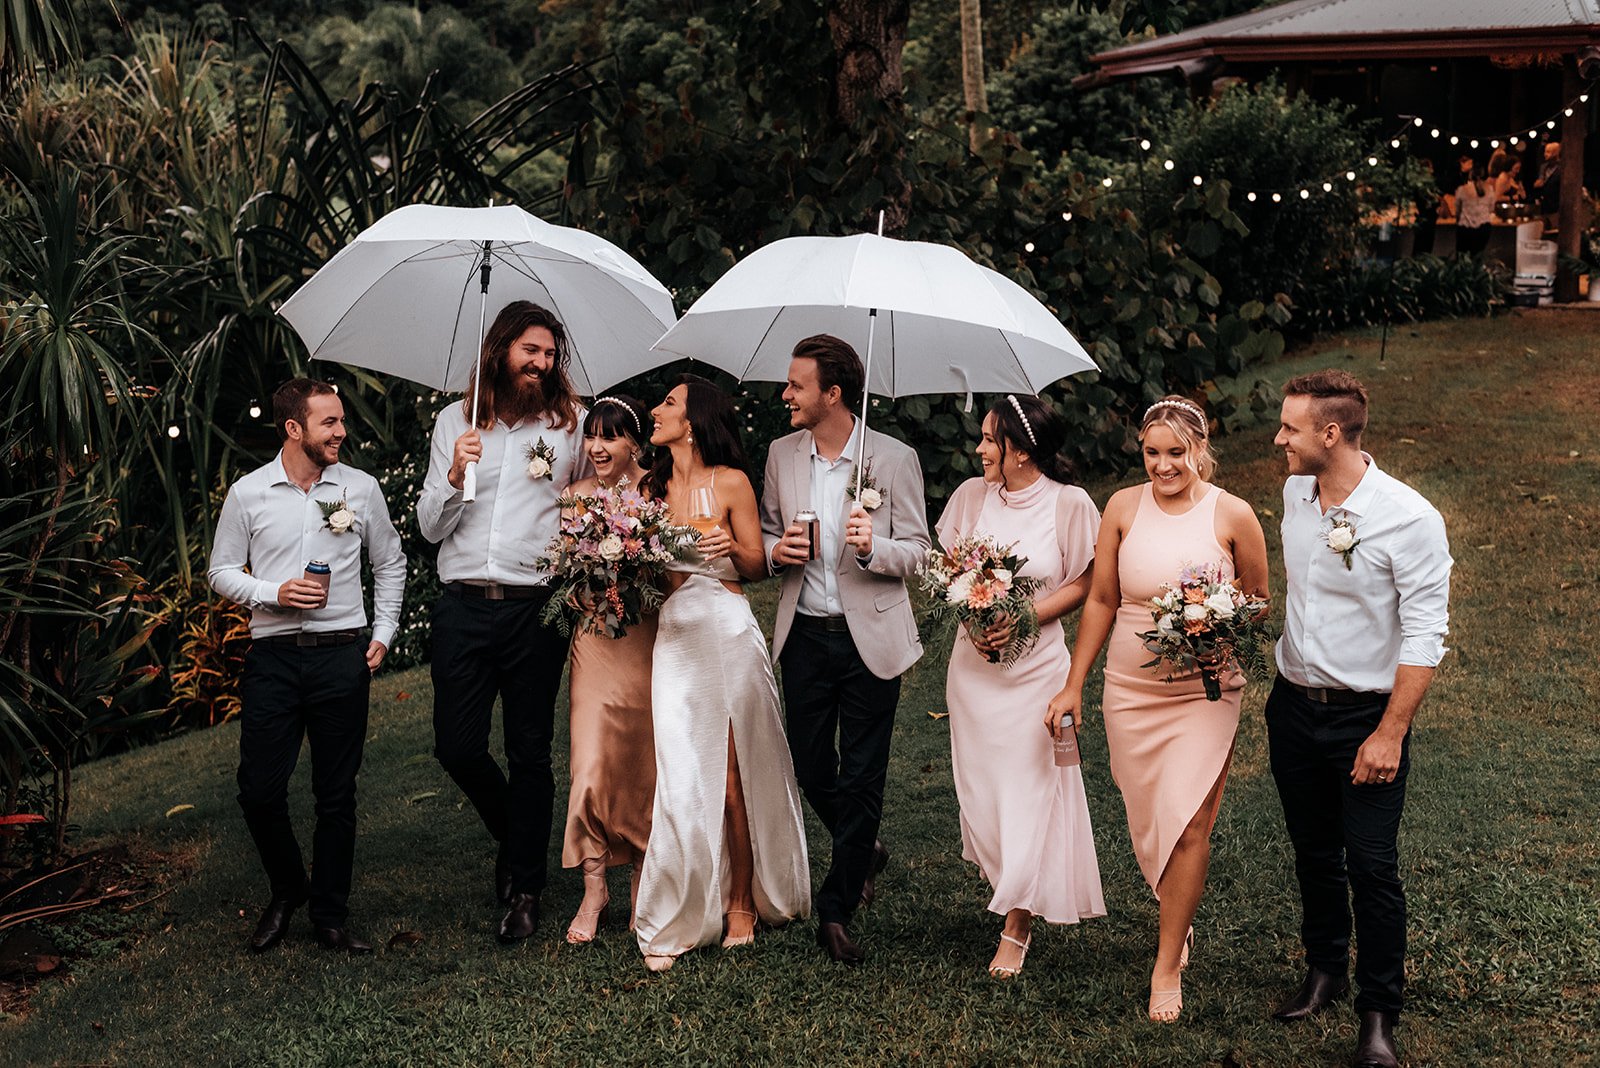 LOVELENSCAPES • The Figs Byron Bay Wedding • Chosen by Kyha • T&C • 464_websize.jpg